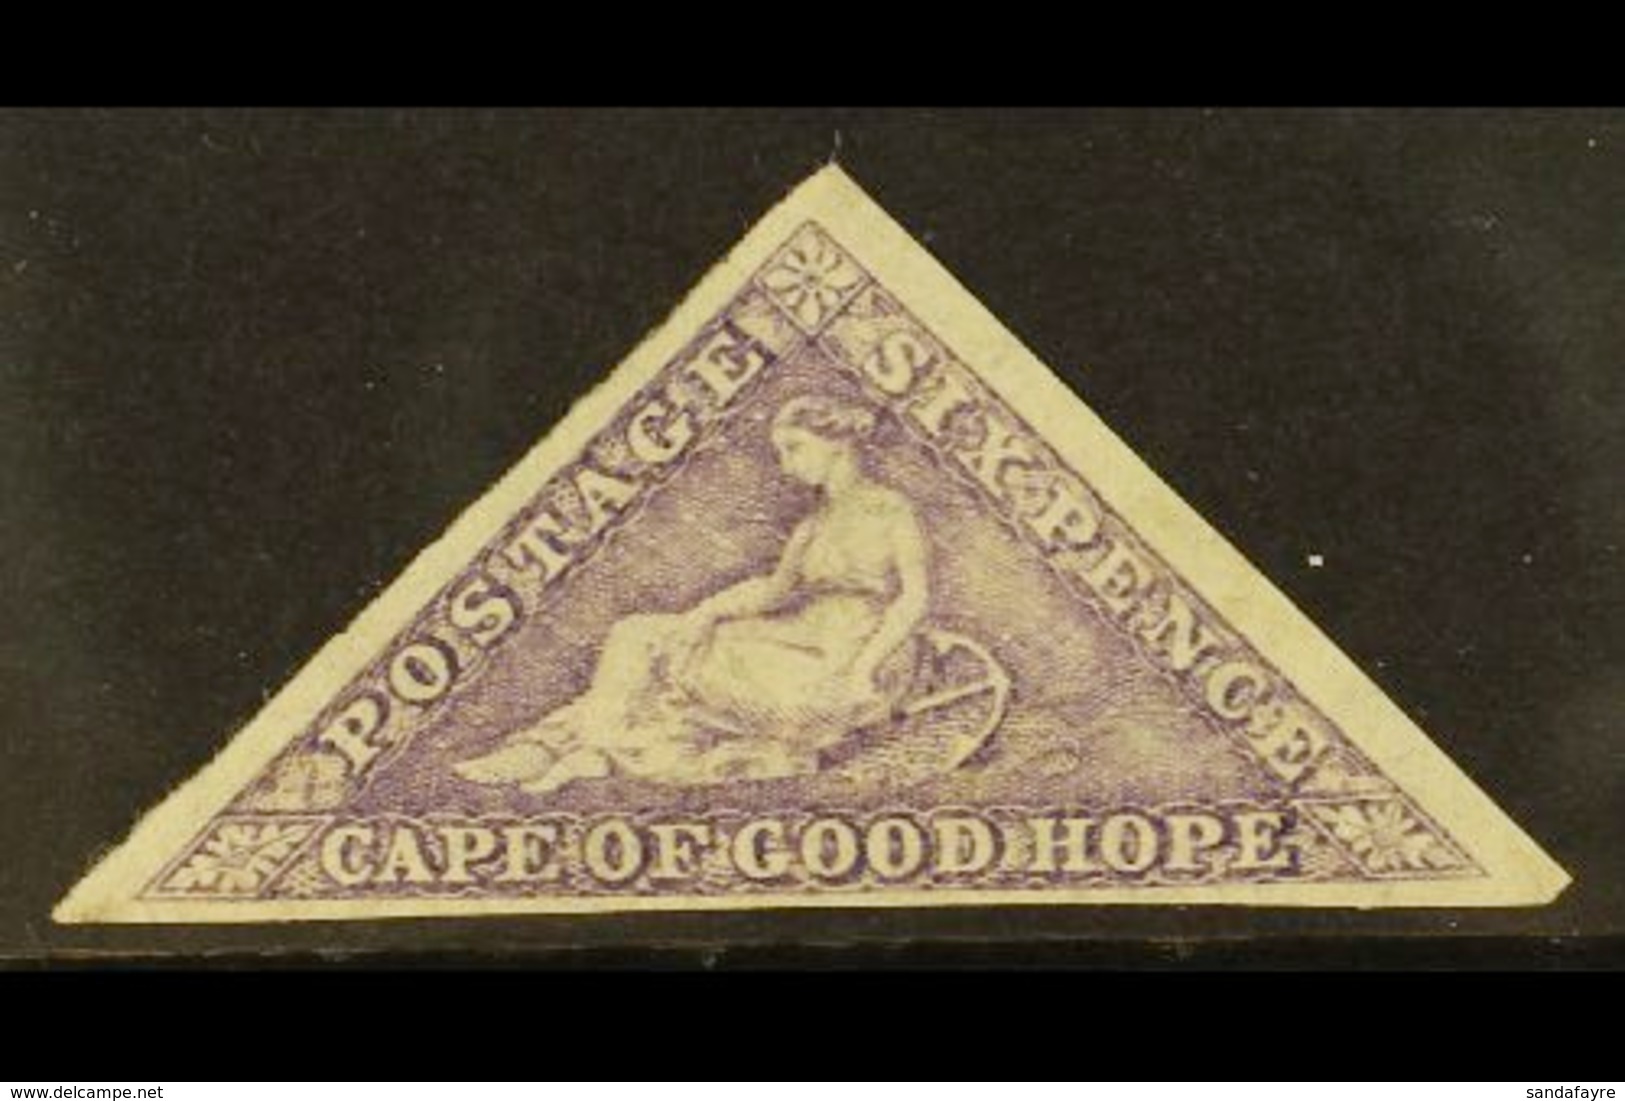 CAPE OF GOOD HOPE 6d Bright Mauve, SG 20, Superb Mint Og. Lovely Bright Stamp. For More Images, Please Visit Http://www. - Ohne Zuordnung